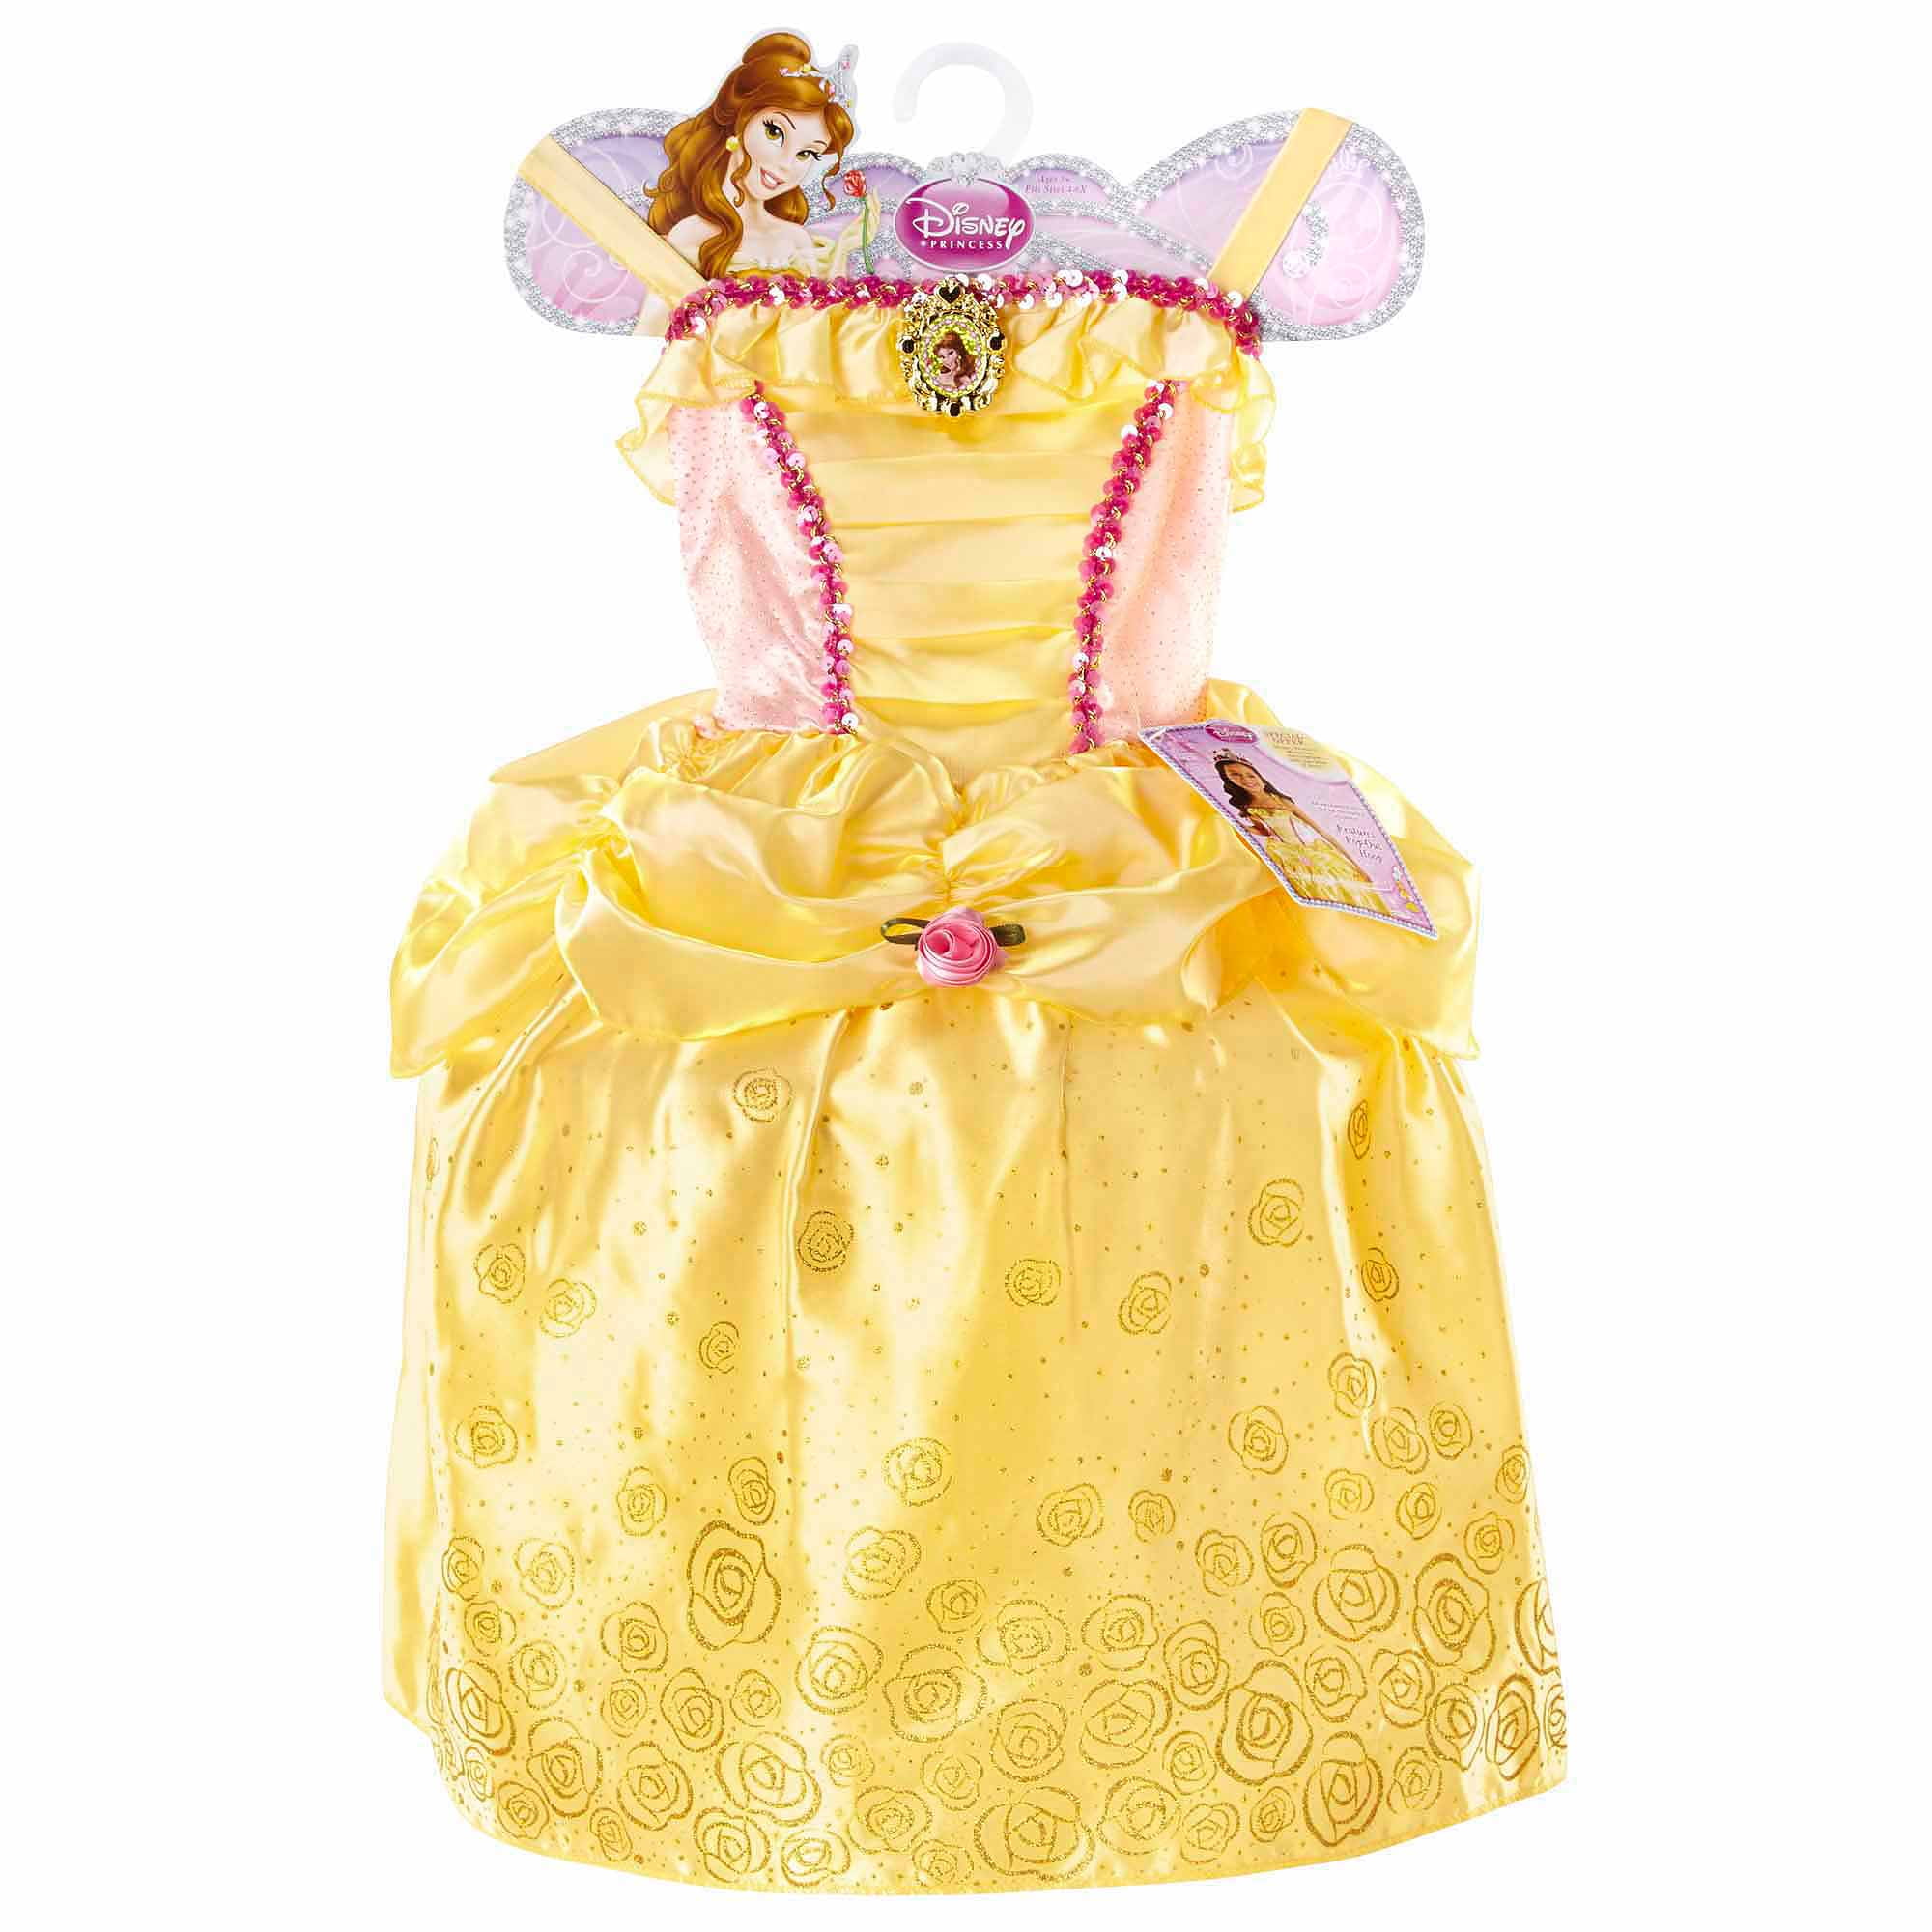 Disney Princess Dp Enchanted Dress Belle - Walmart.com - Walmart.com